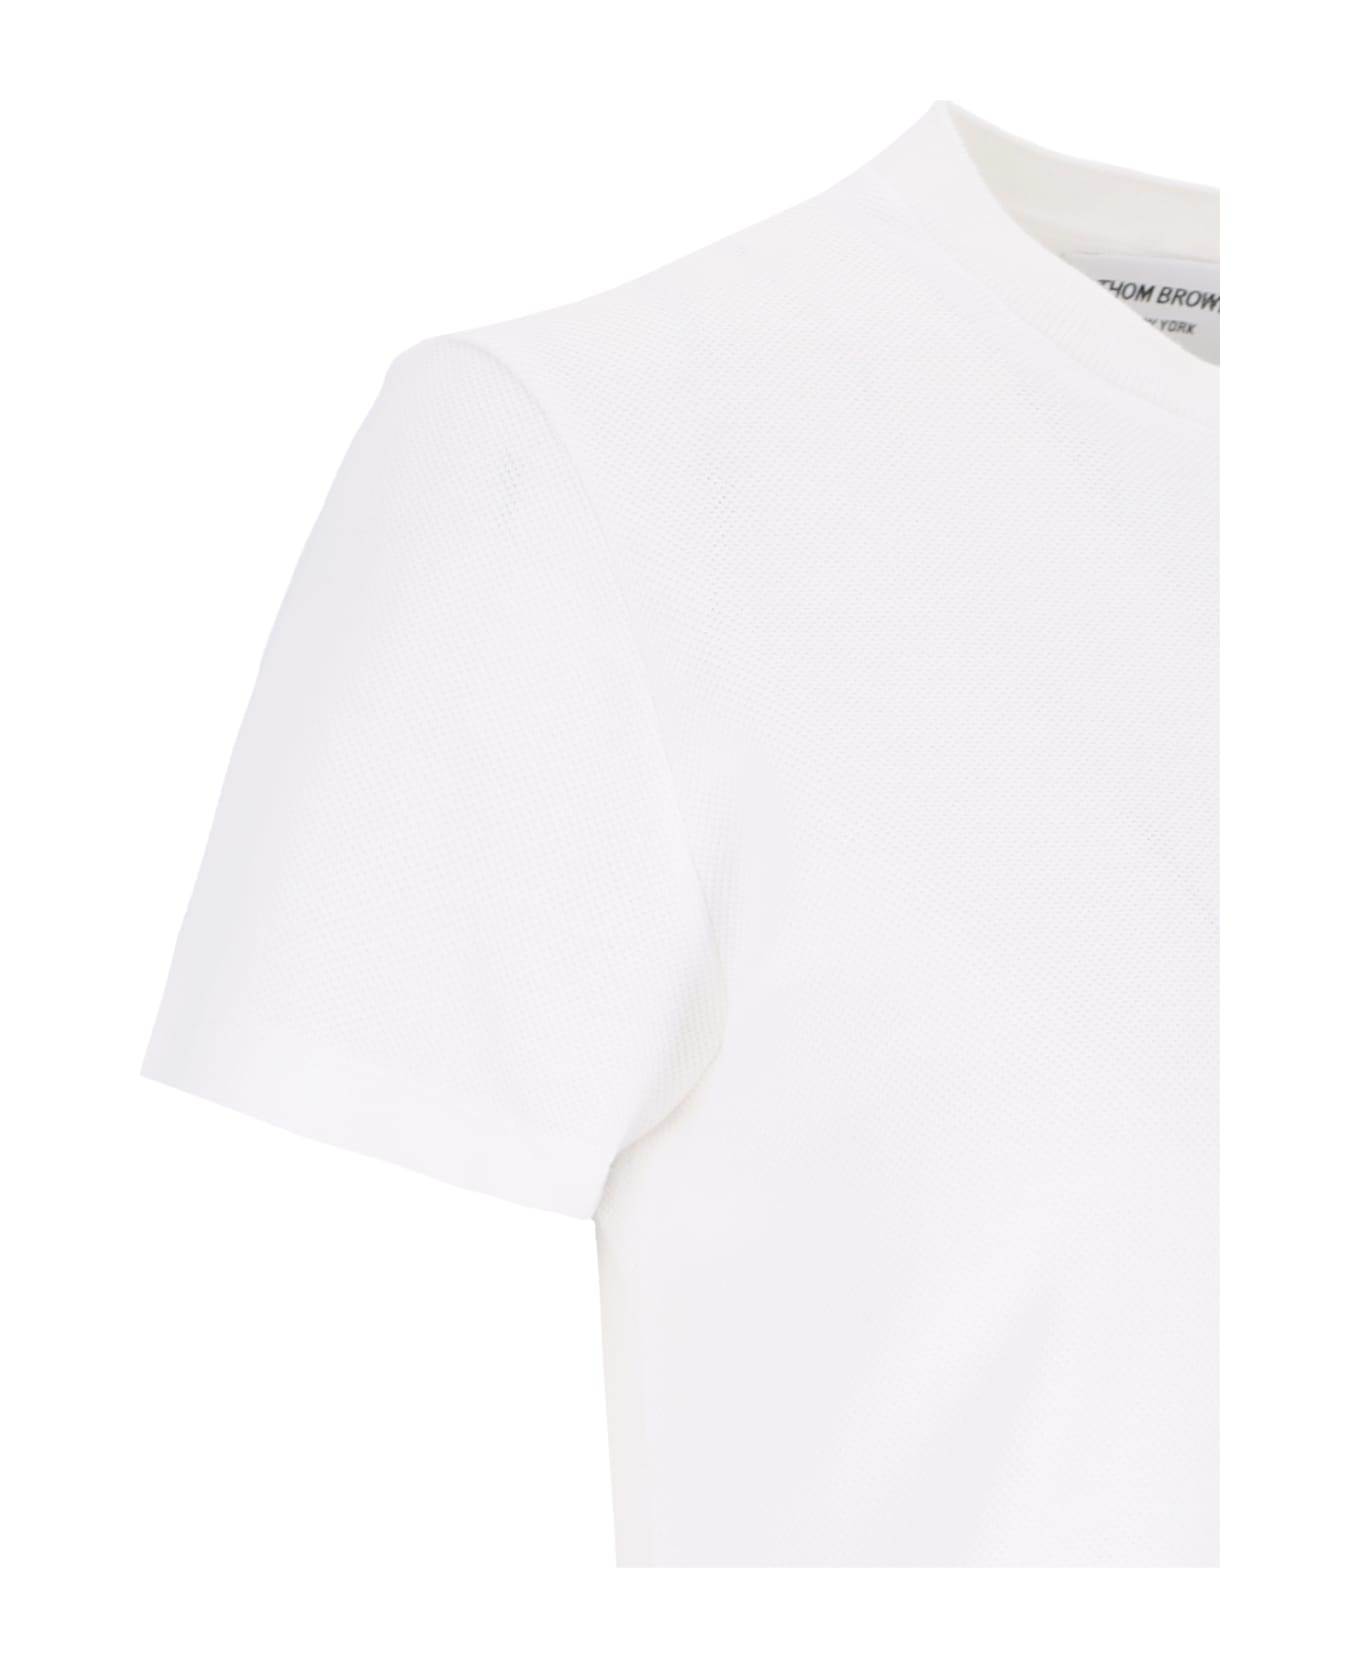 Thom Browne - Striped Band t-shirt - White